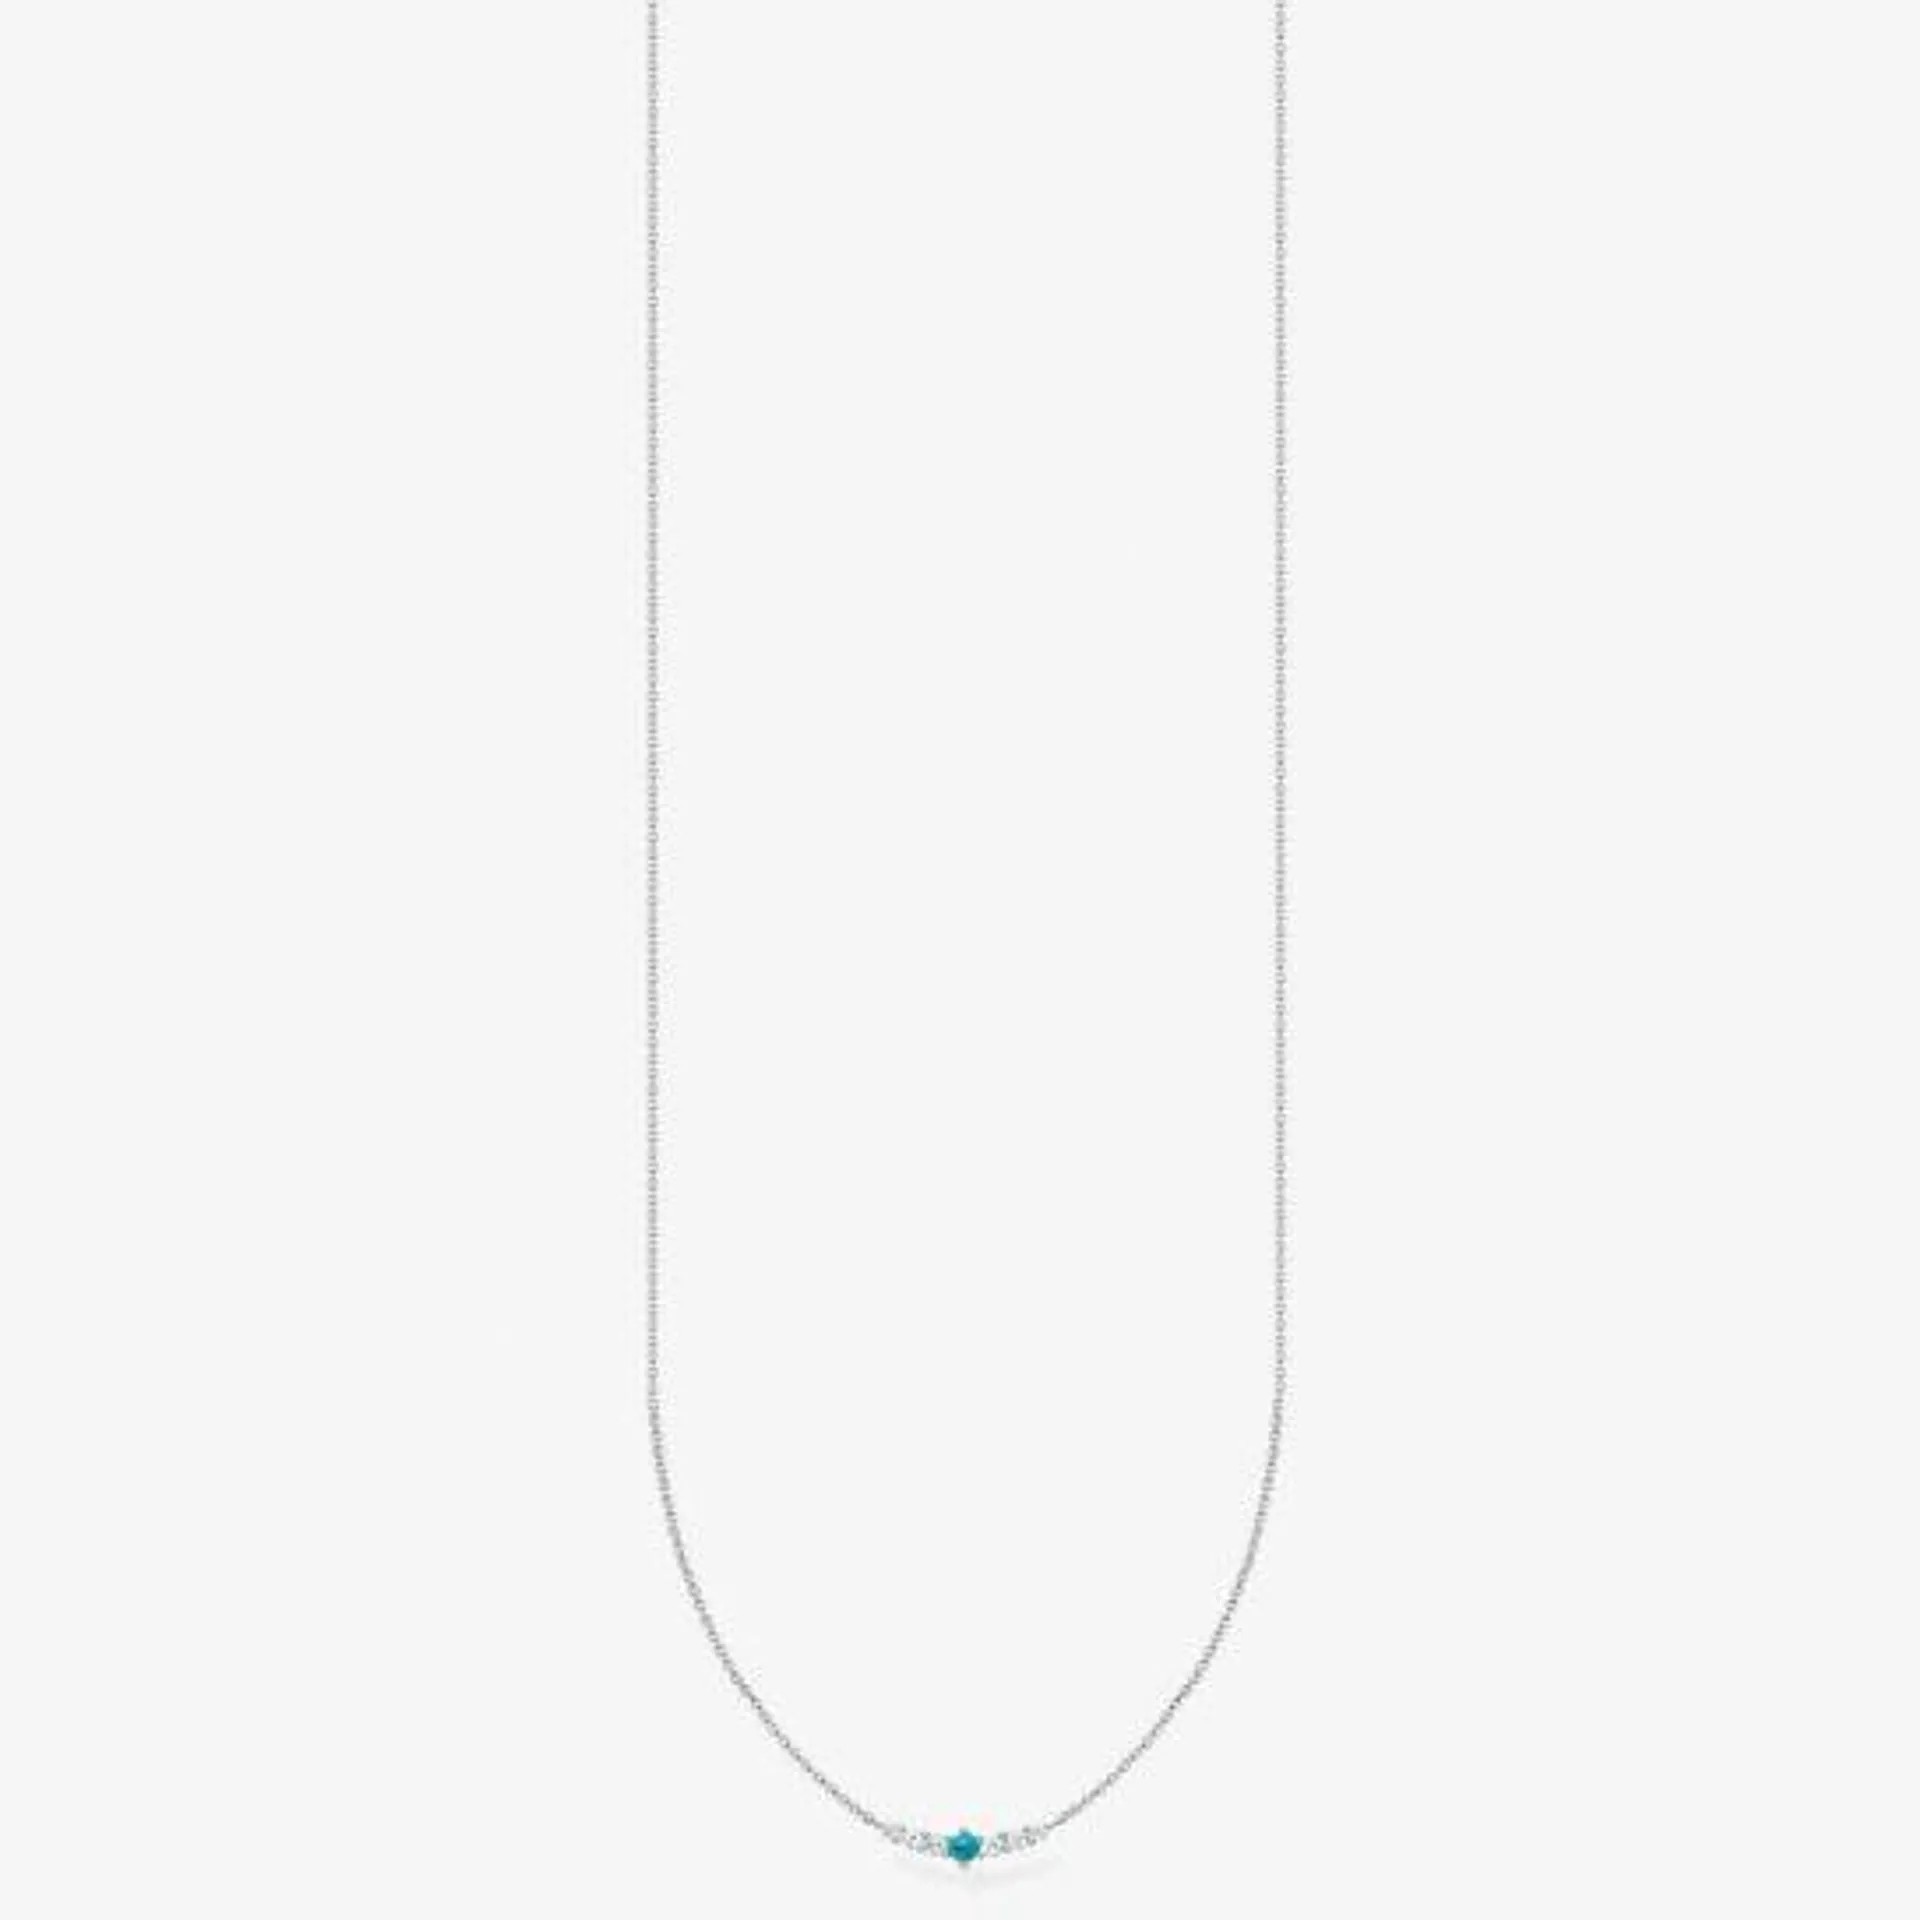 THOMAS SABO Sterling Silver Turquoise Necklace KE2093-405-17